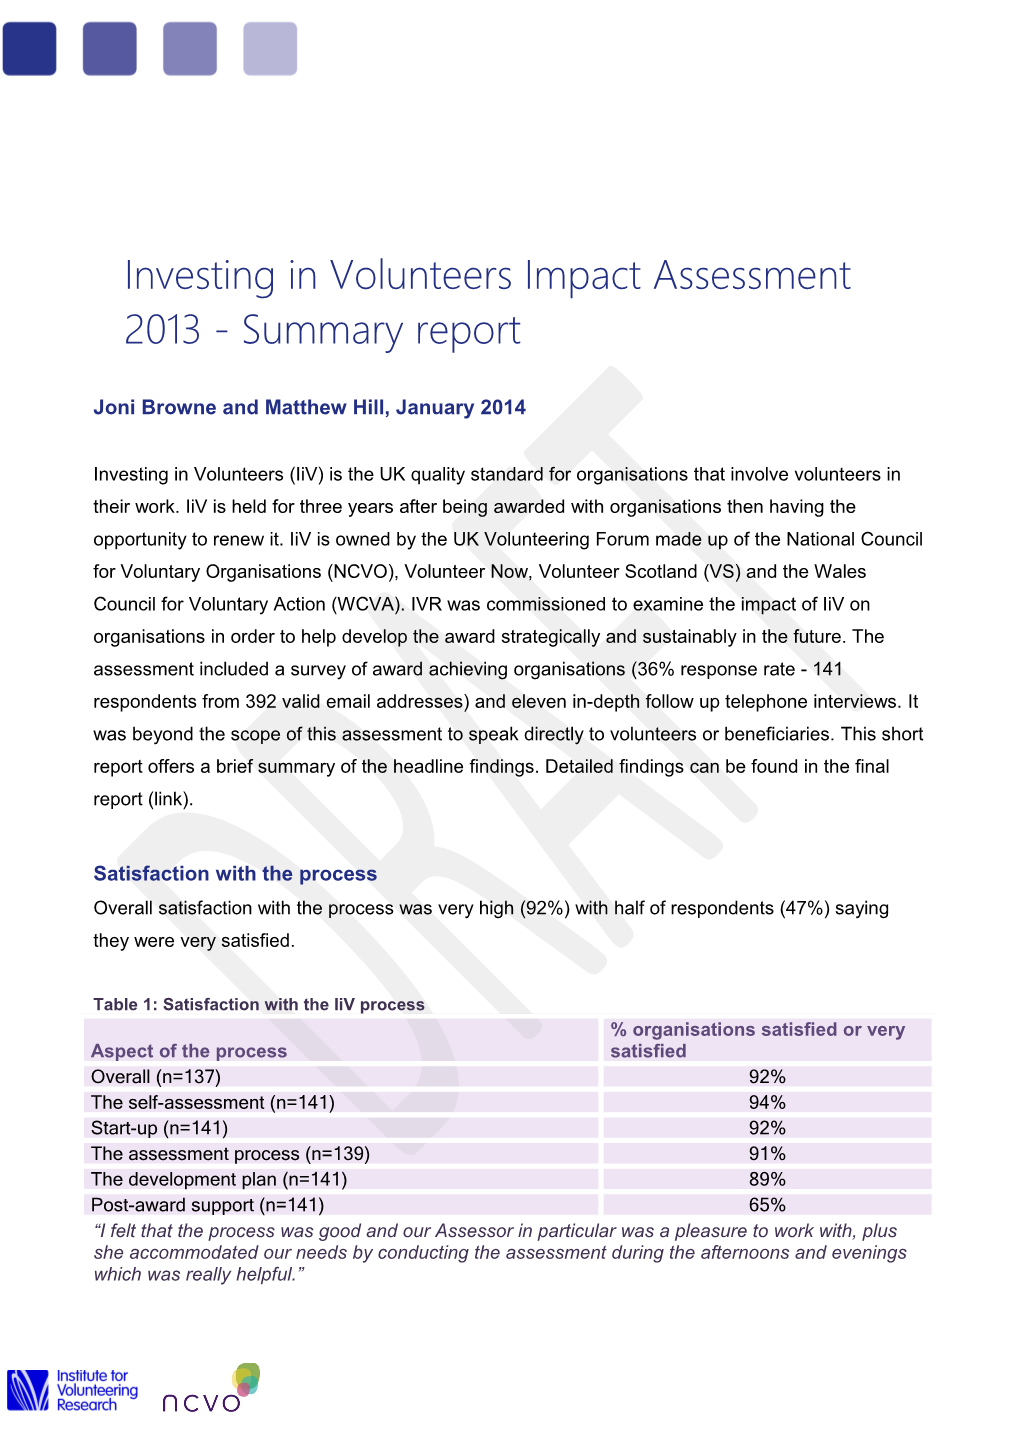 Investing in Volunteers Impact Assessment 2013 - Summary Report